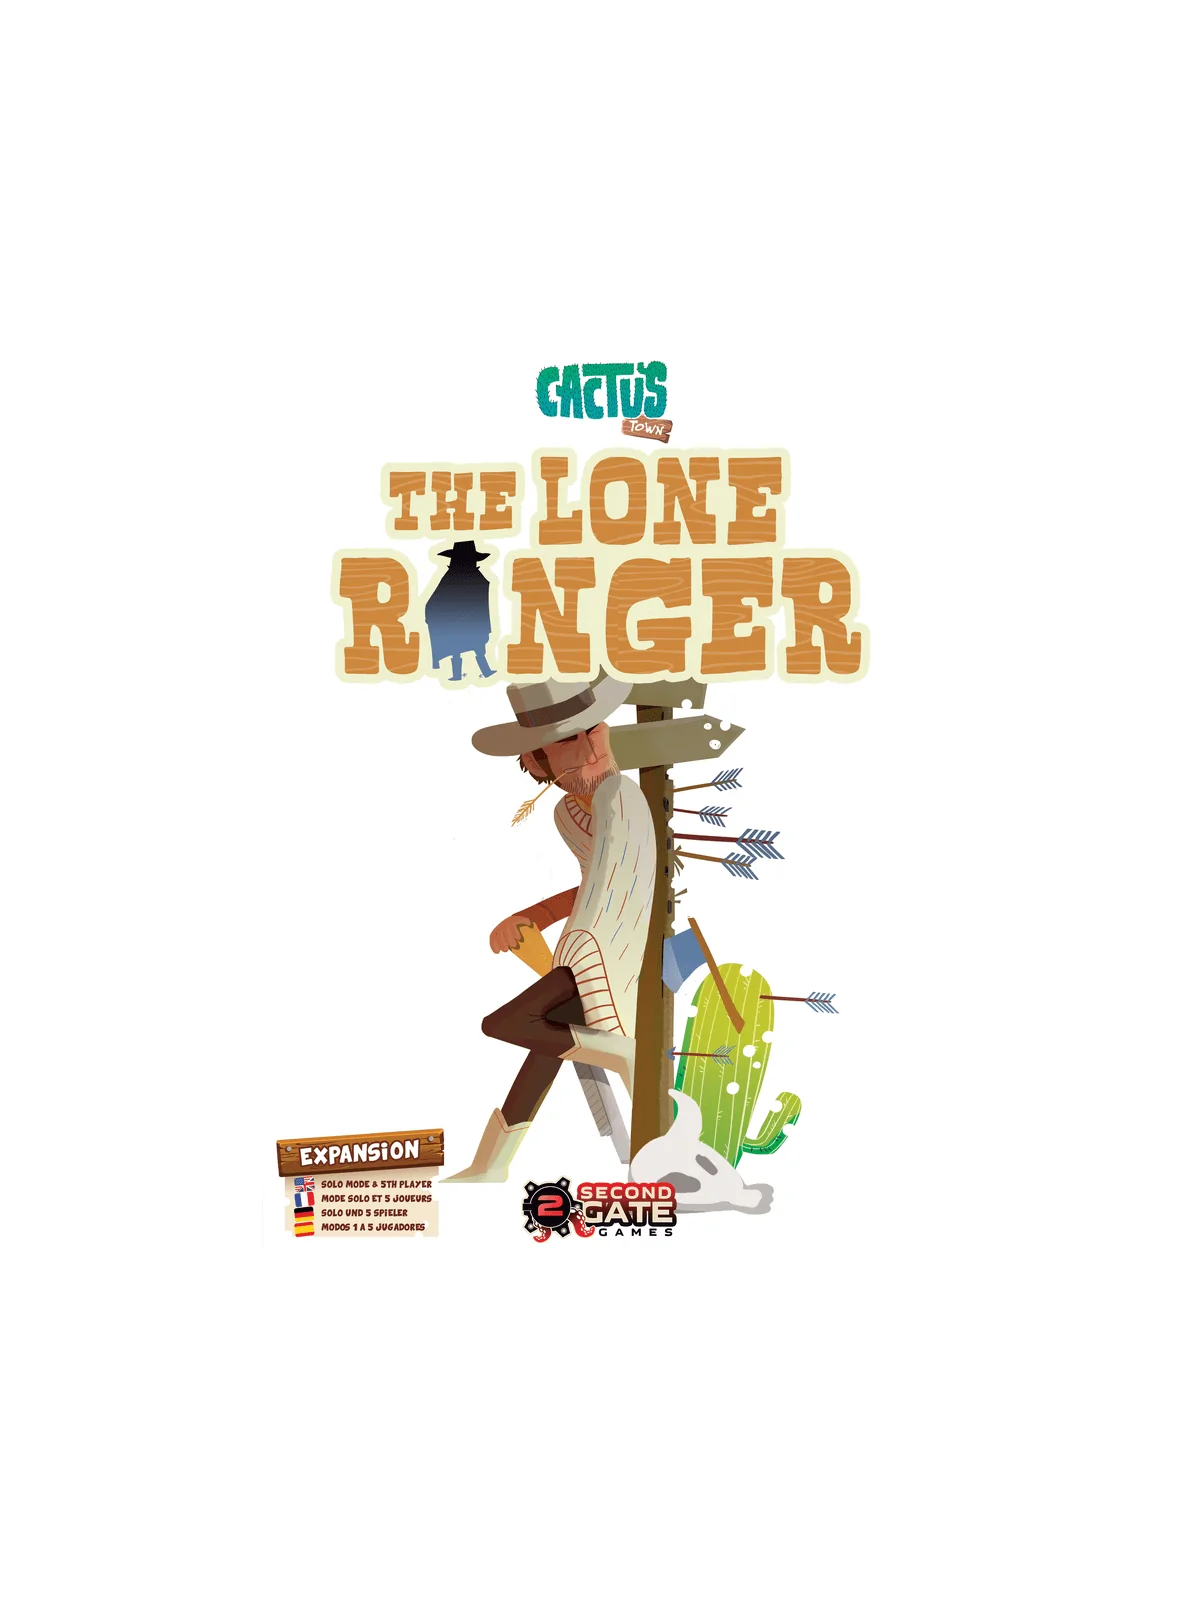 Comprar The Lone Ranger: Cactus Town - Expansion 01 barato al mejor pr